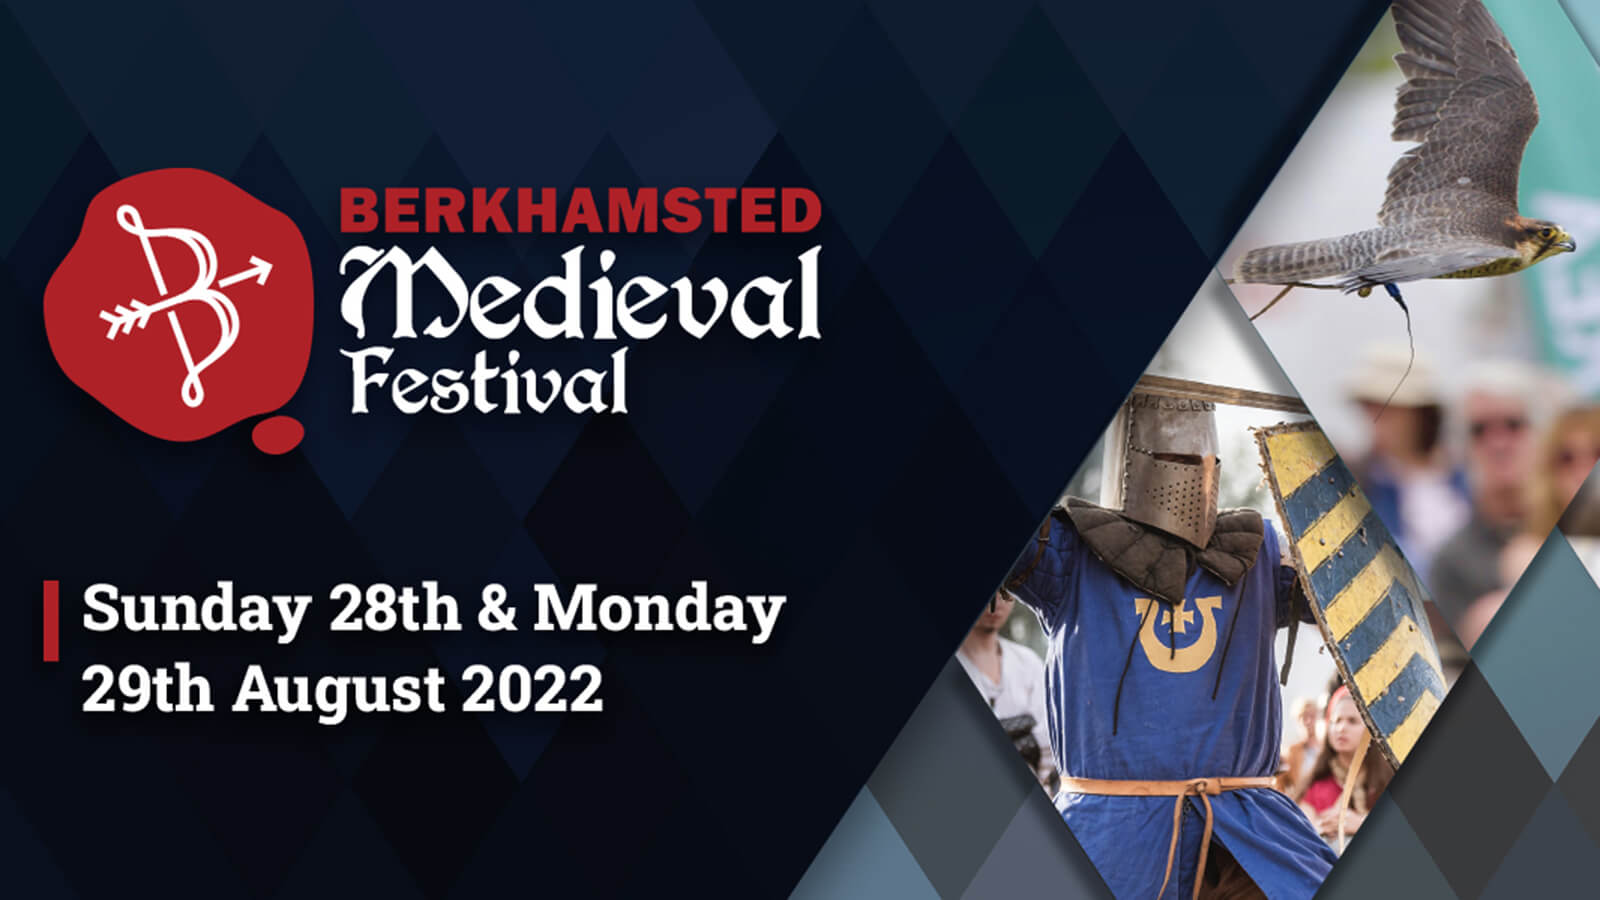 Medieval festival